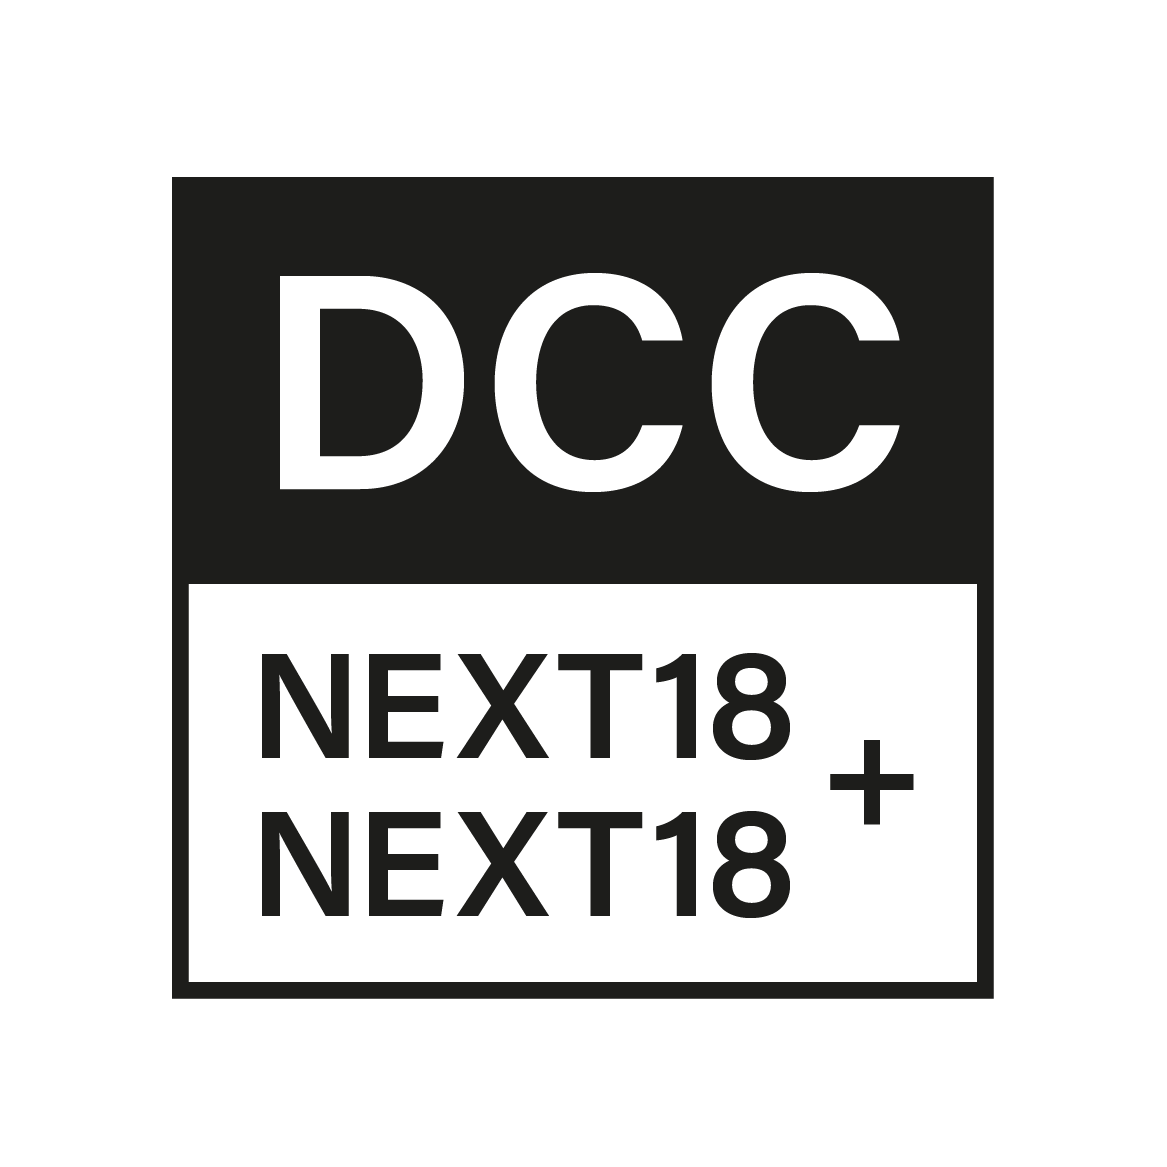 DCC_Next18_Next18